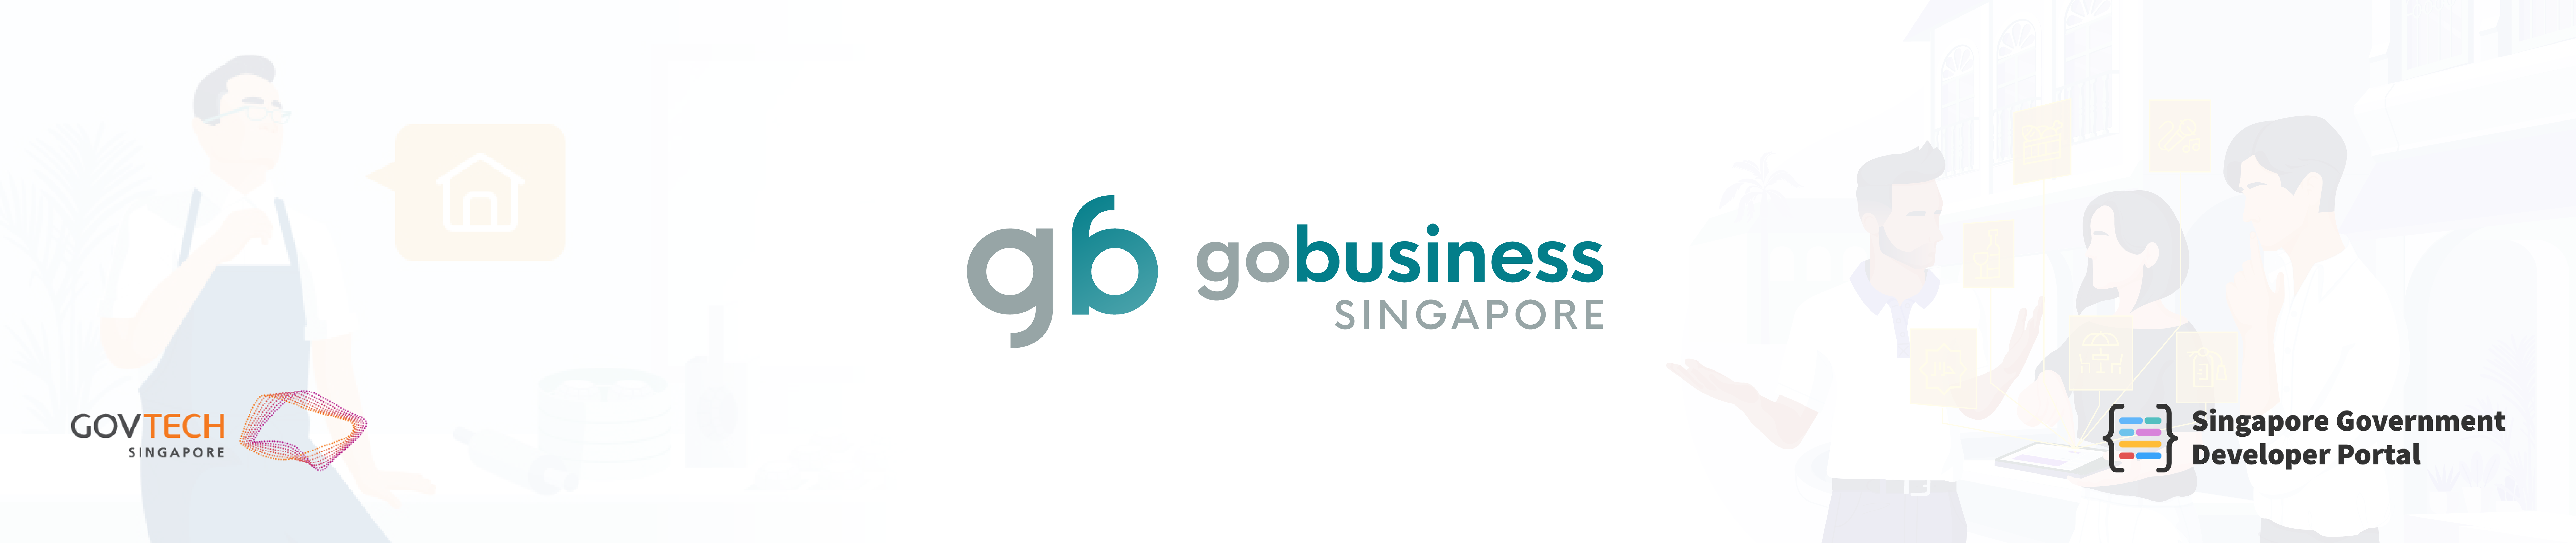 GoBusiness header banner for Singapore Government Developer Portal